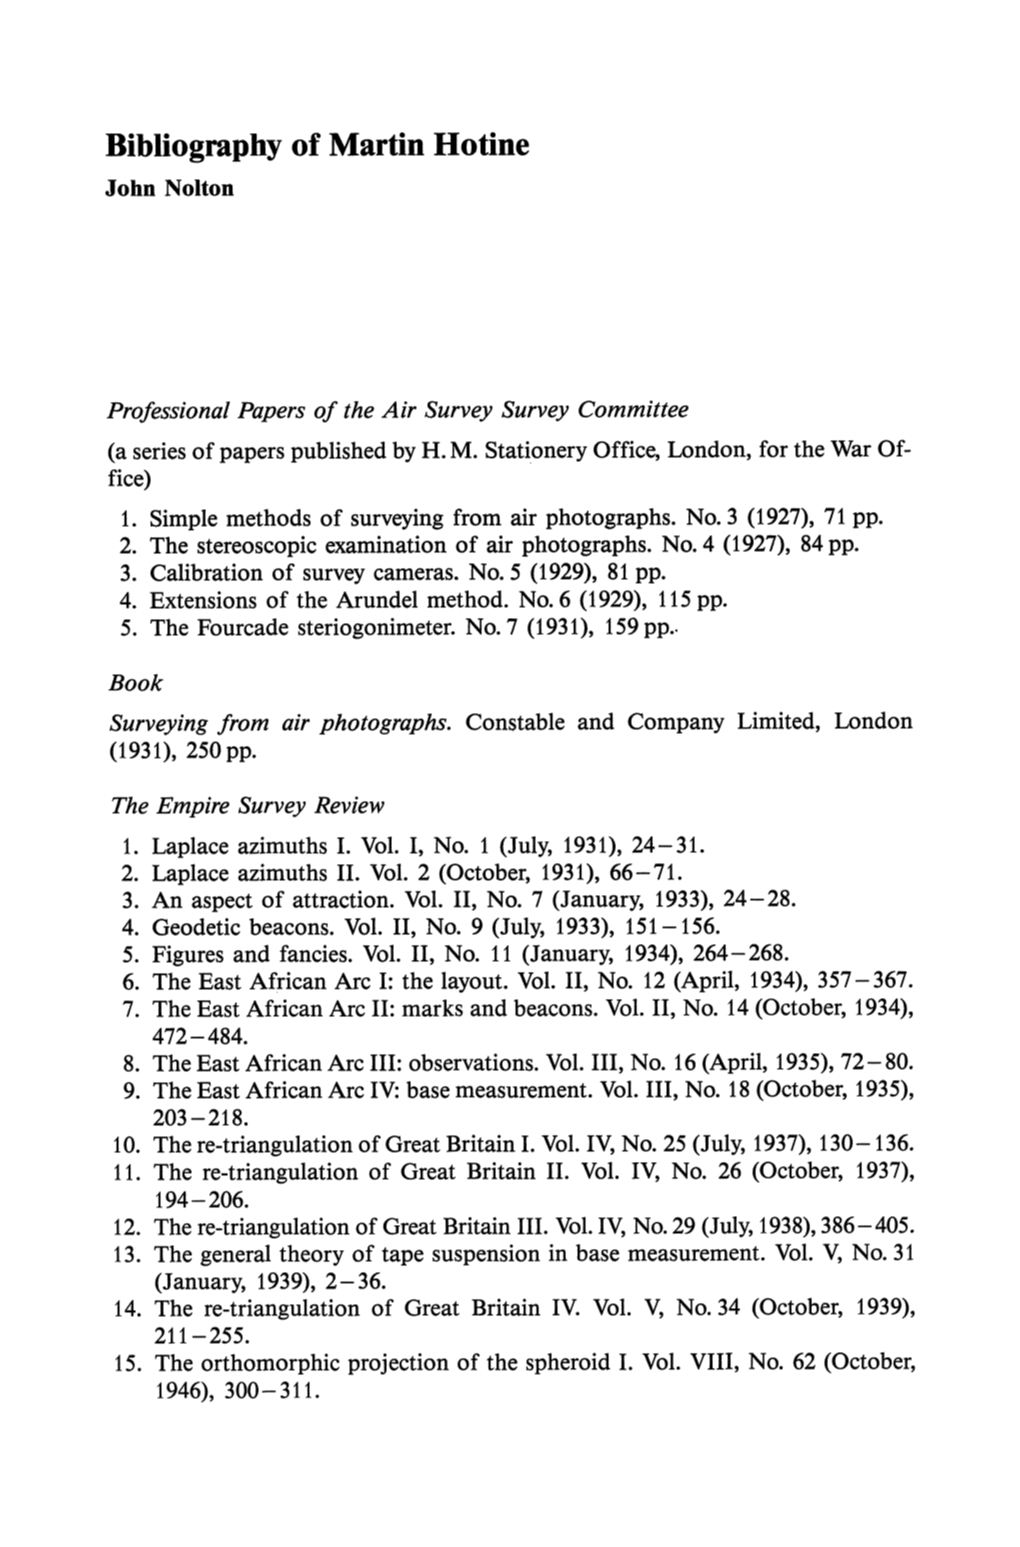 Bibliography of Martin Hotine John Nolton